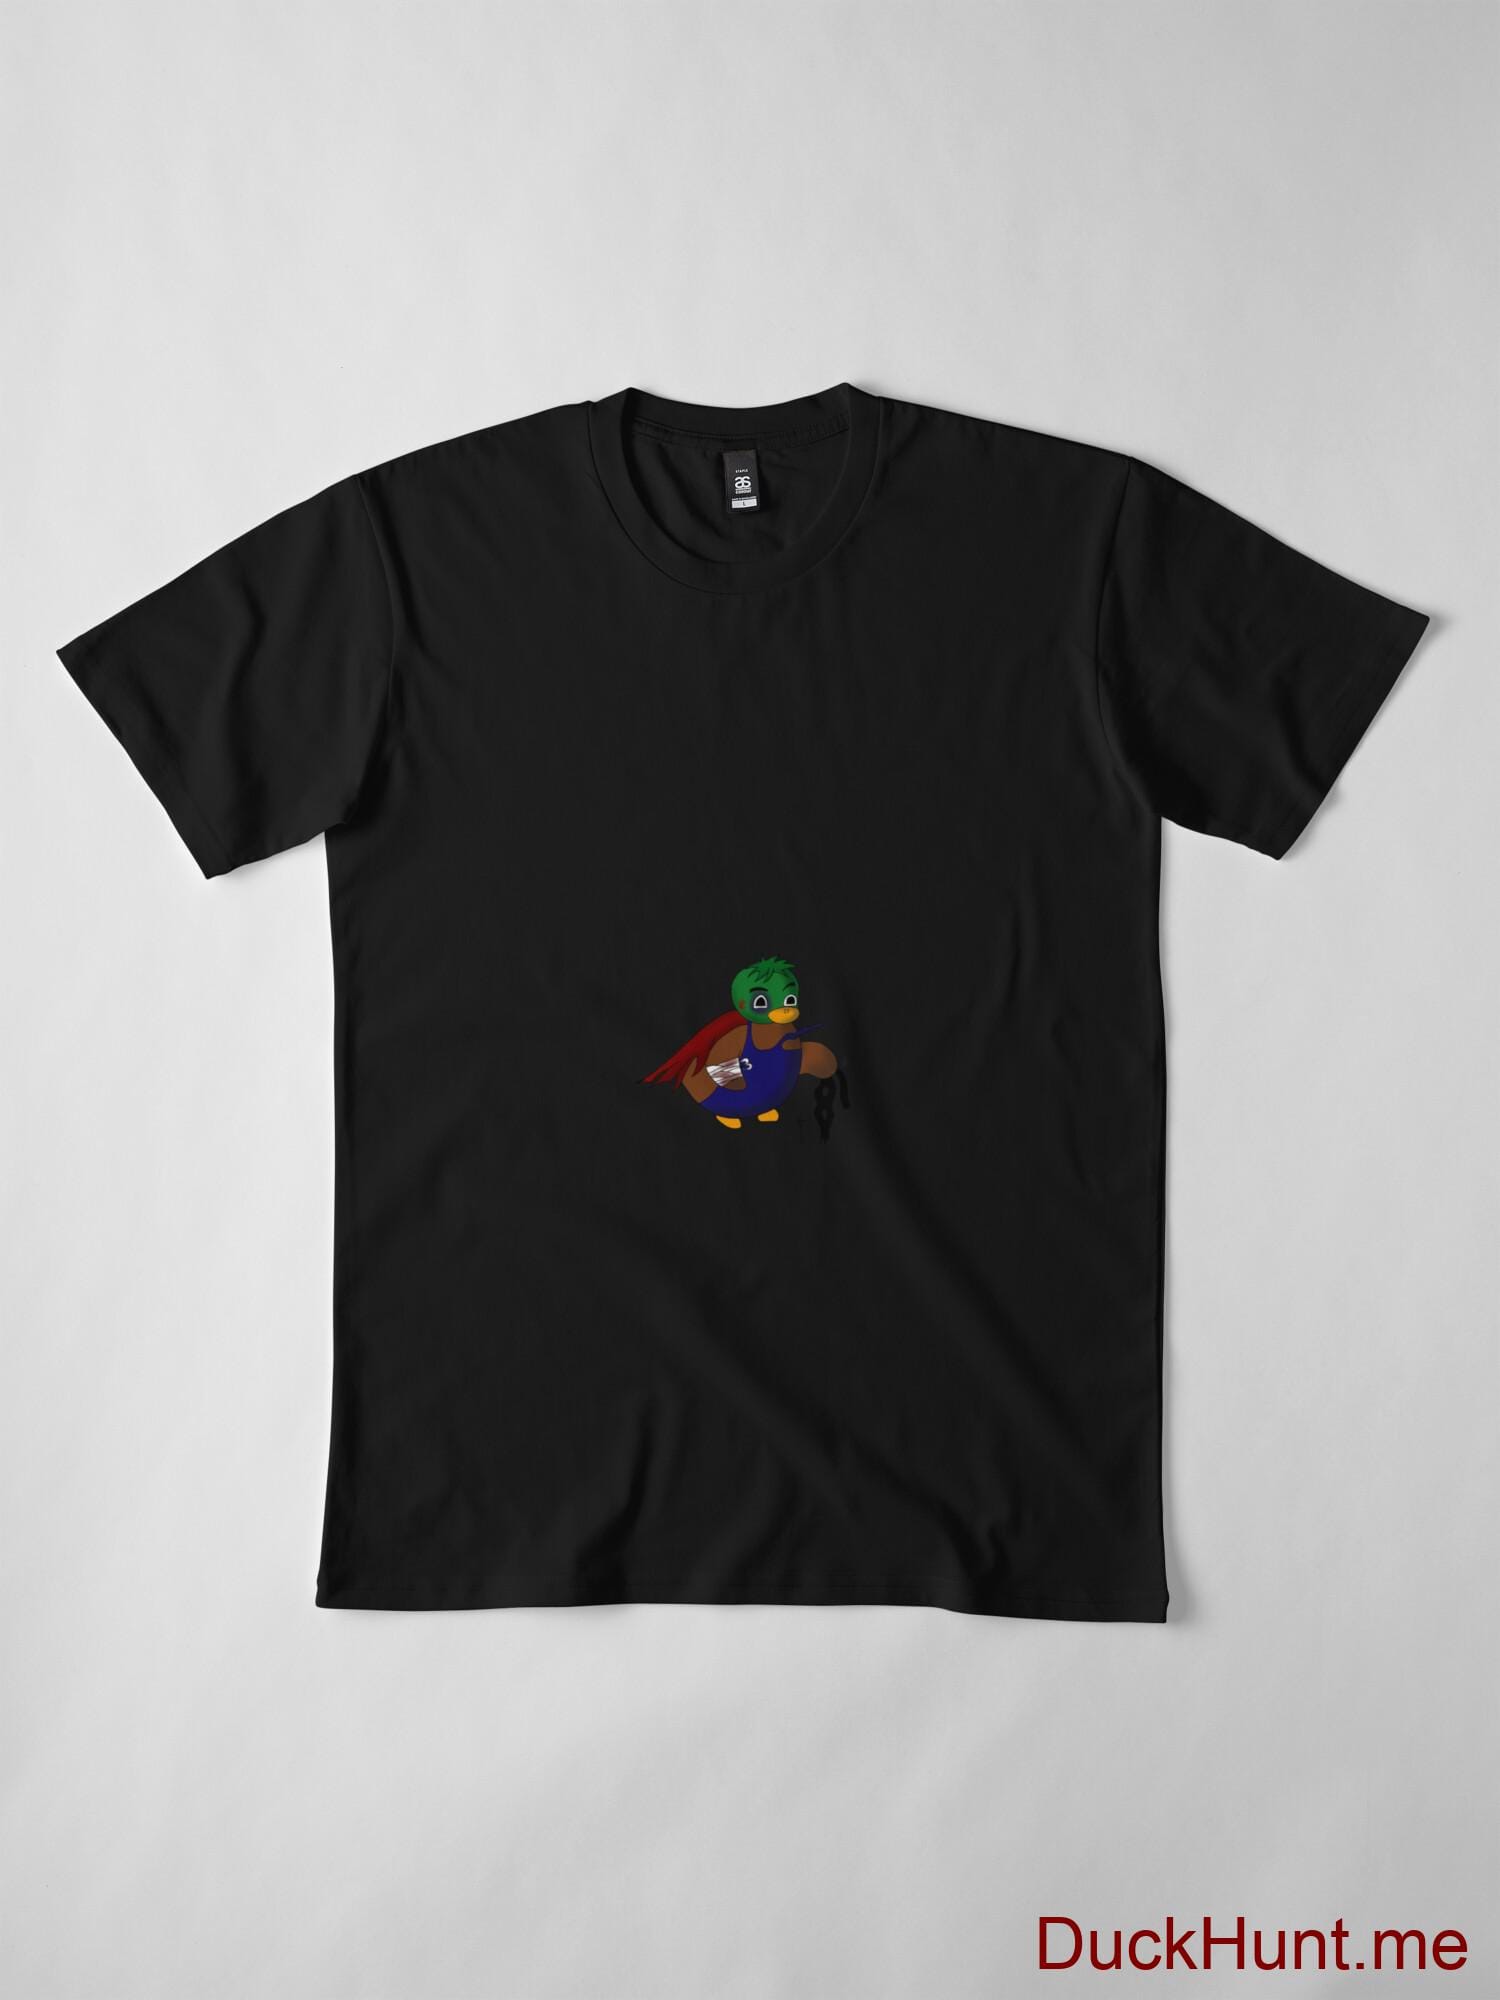 Dead DuckHunt Boss (smokeless) Black Premium T-Shirt (Front printed) alternative image 3